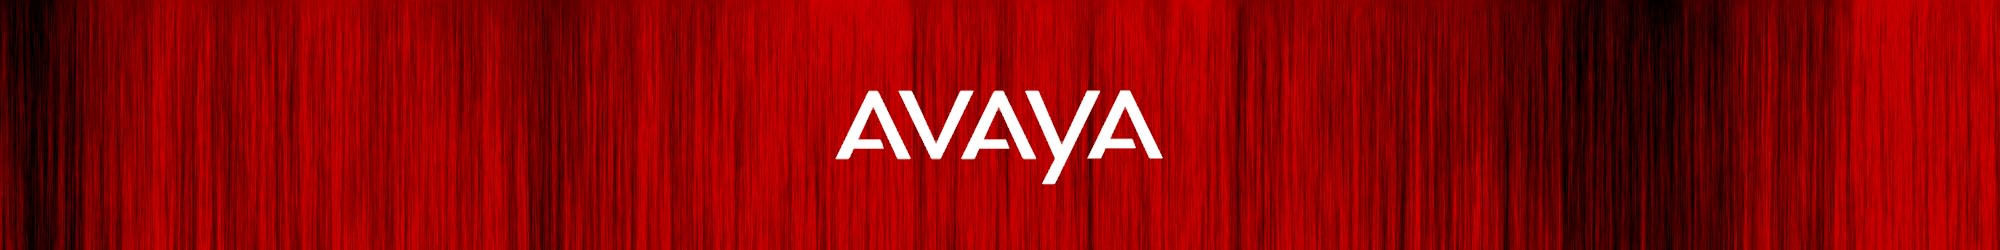 Avaya Telephone Systems